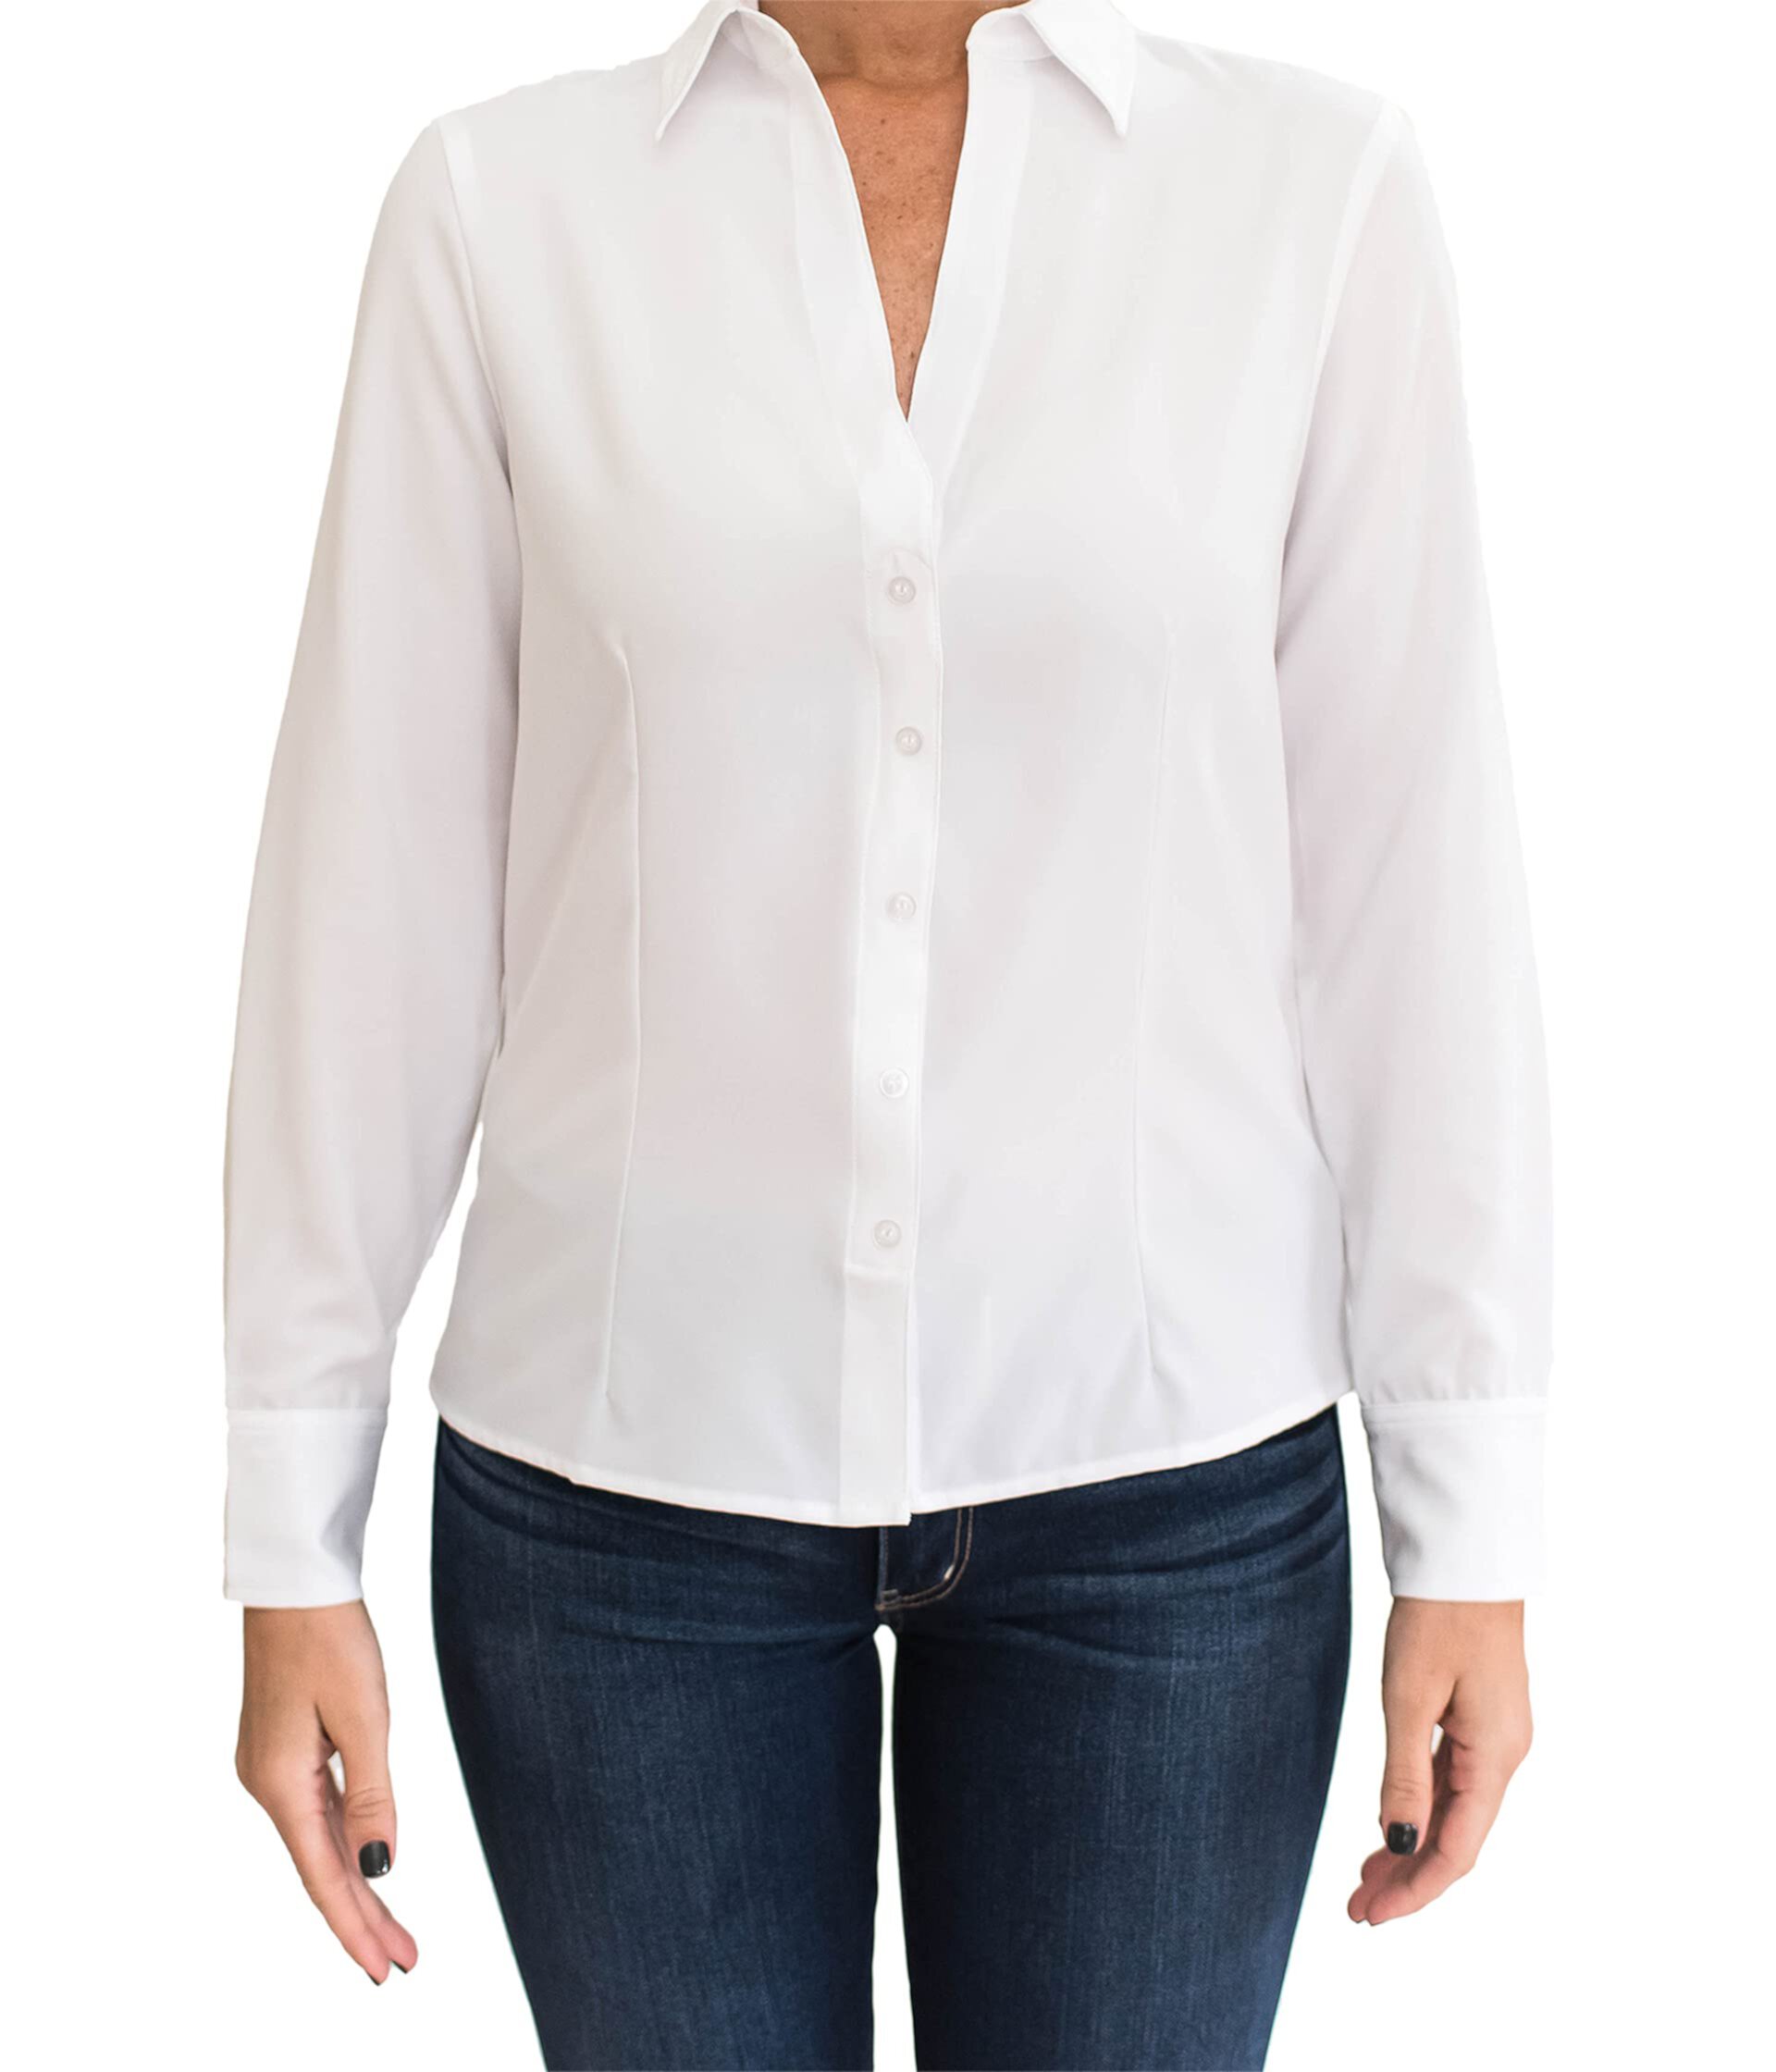 Адаптивная блузка Rose Smart Adaptive Clothing